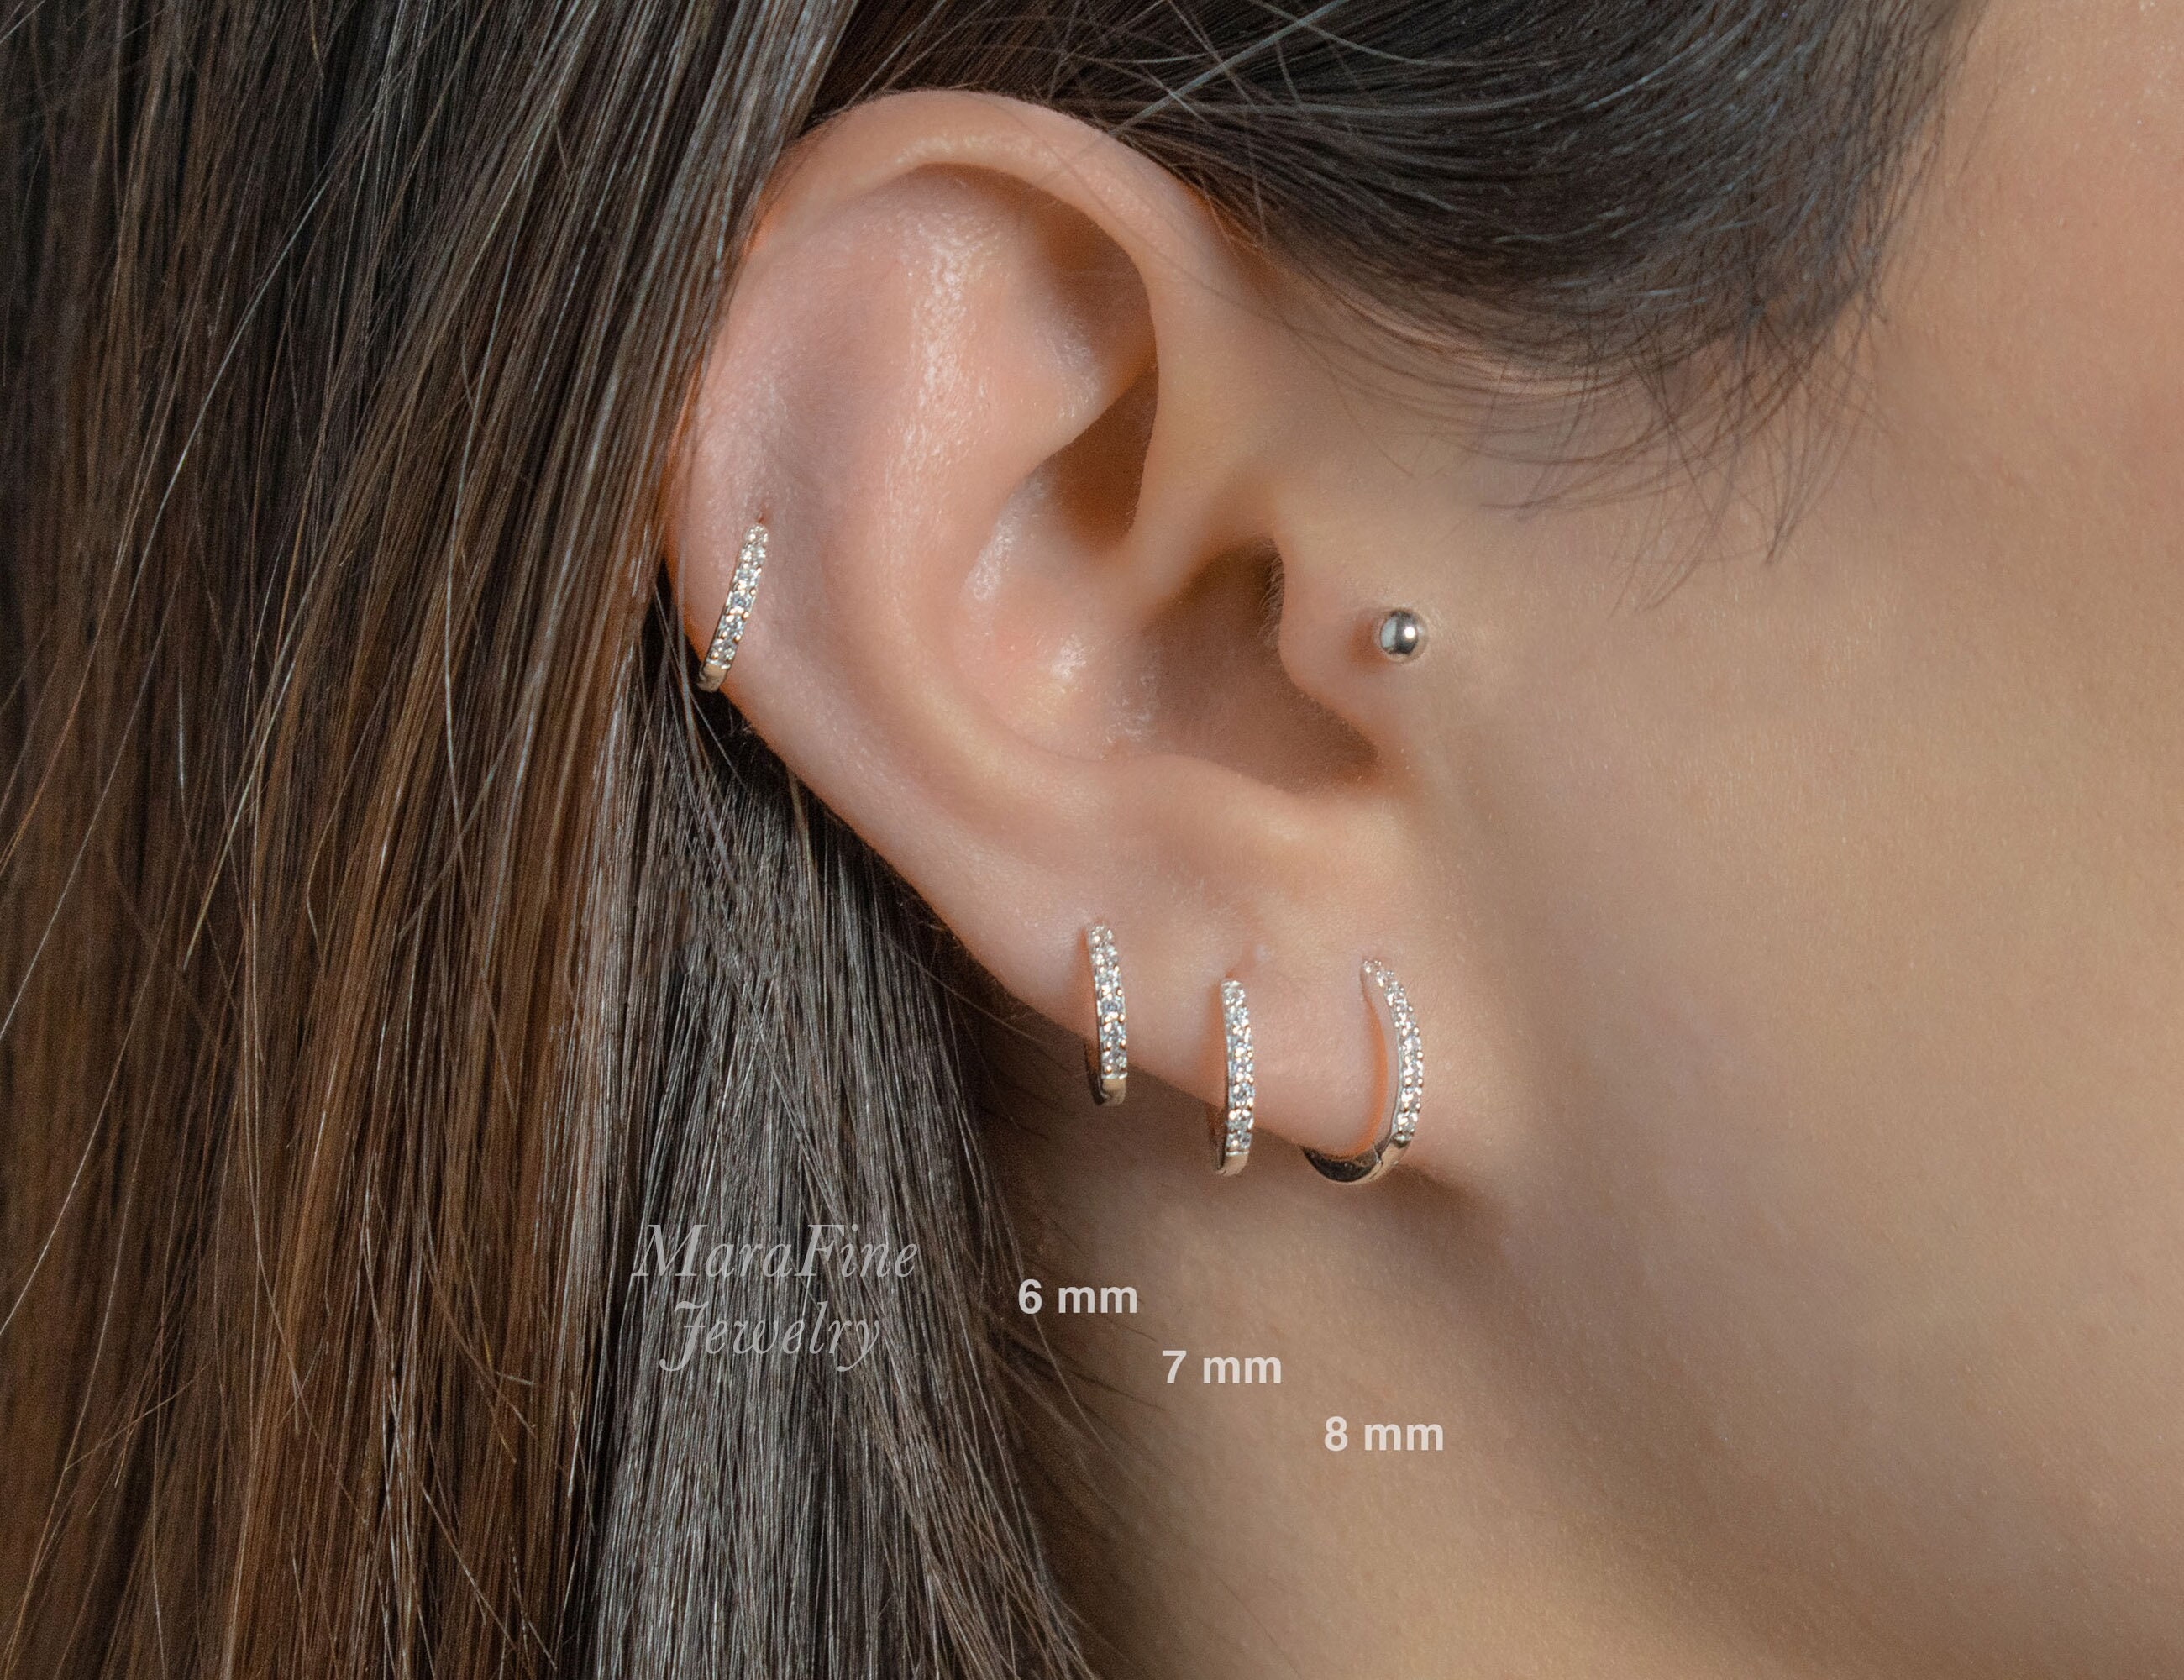 Minimalist Earrings Gold Dangle Hoops Second Hole Hoop Earrings Dainty Dangle Huggie Hoop Earrings Sterling Silver Hoop Earrings